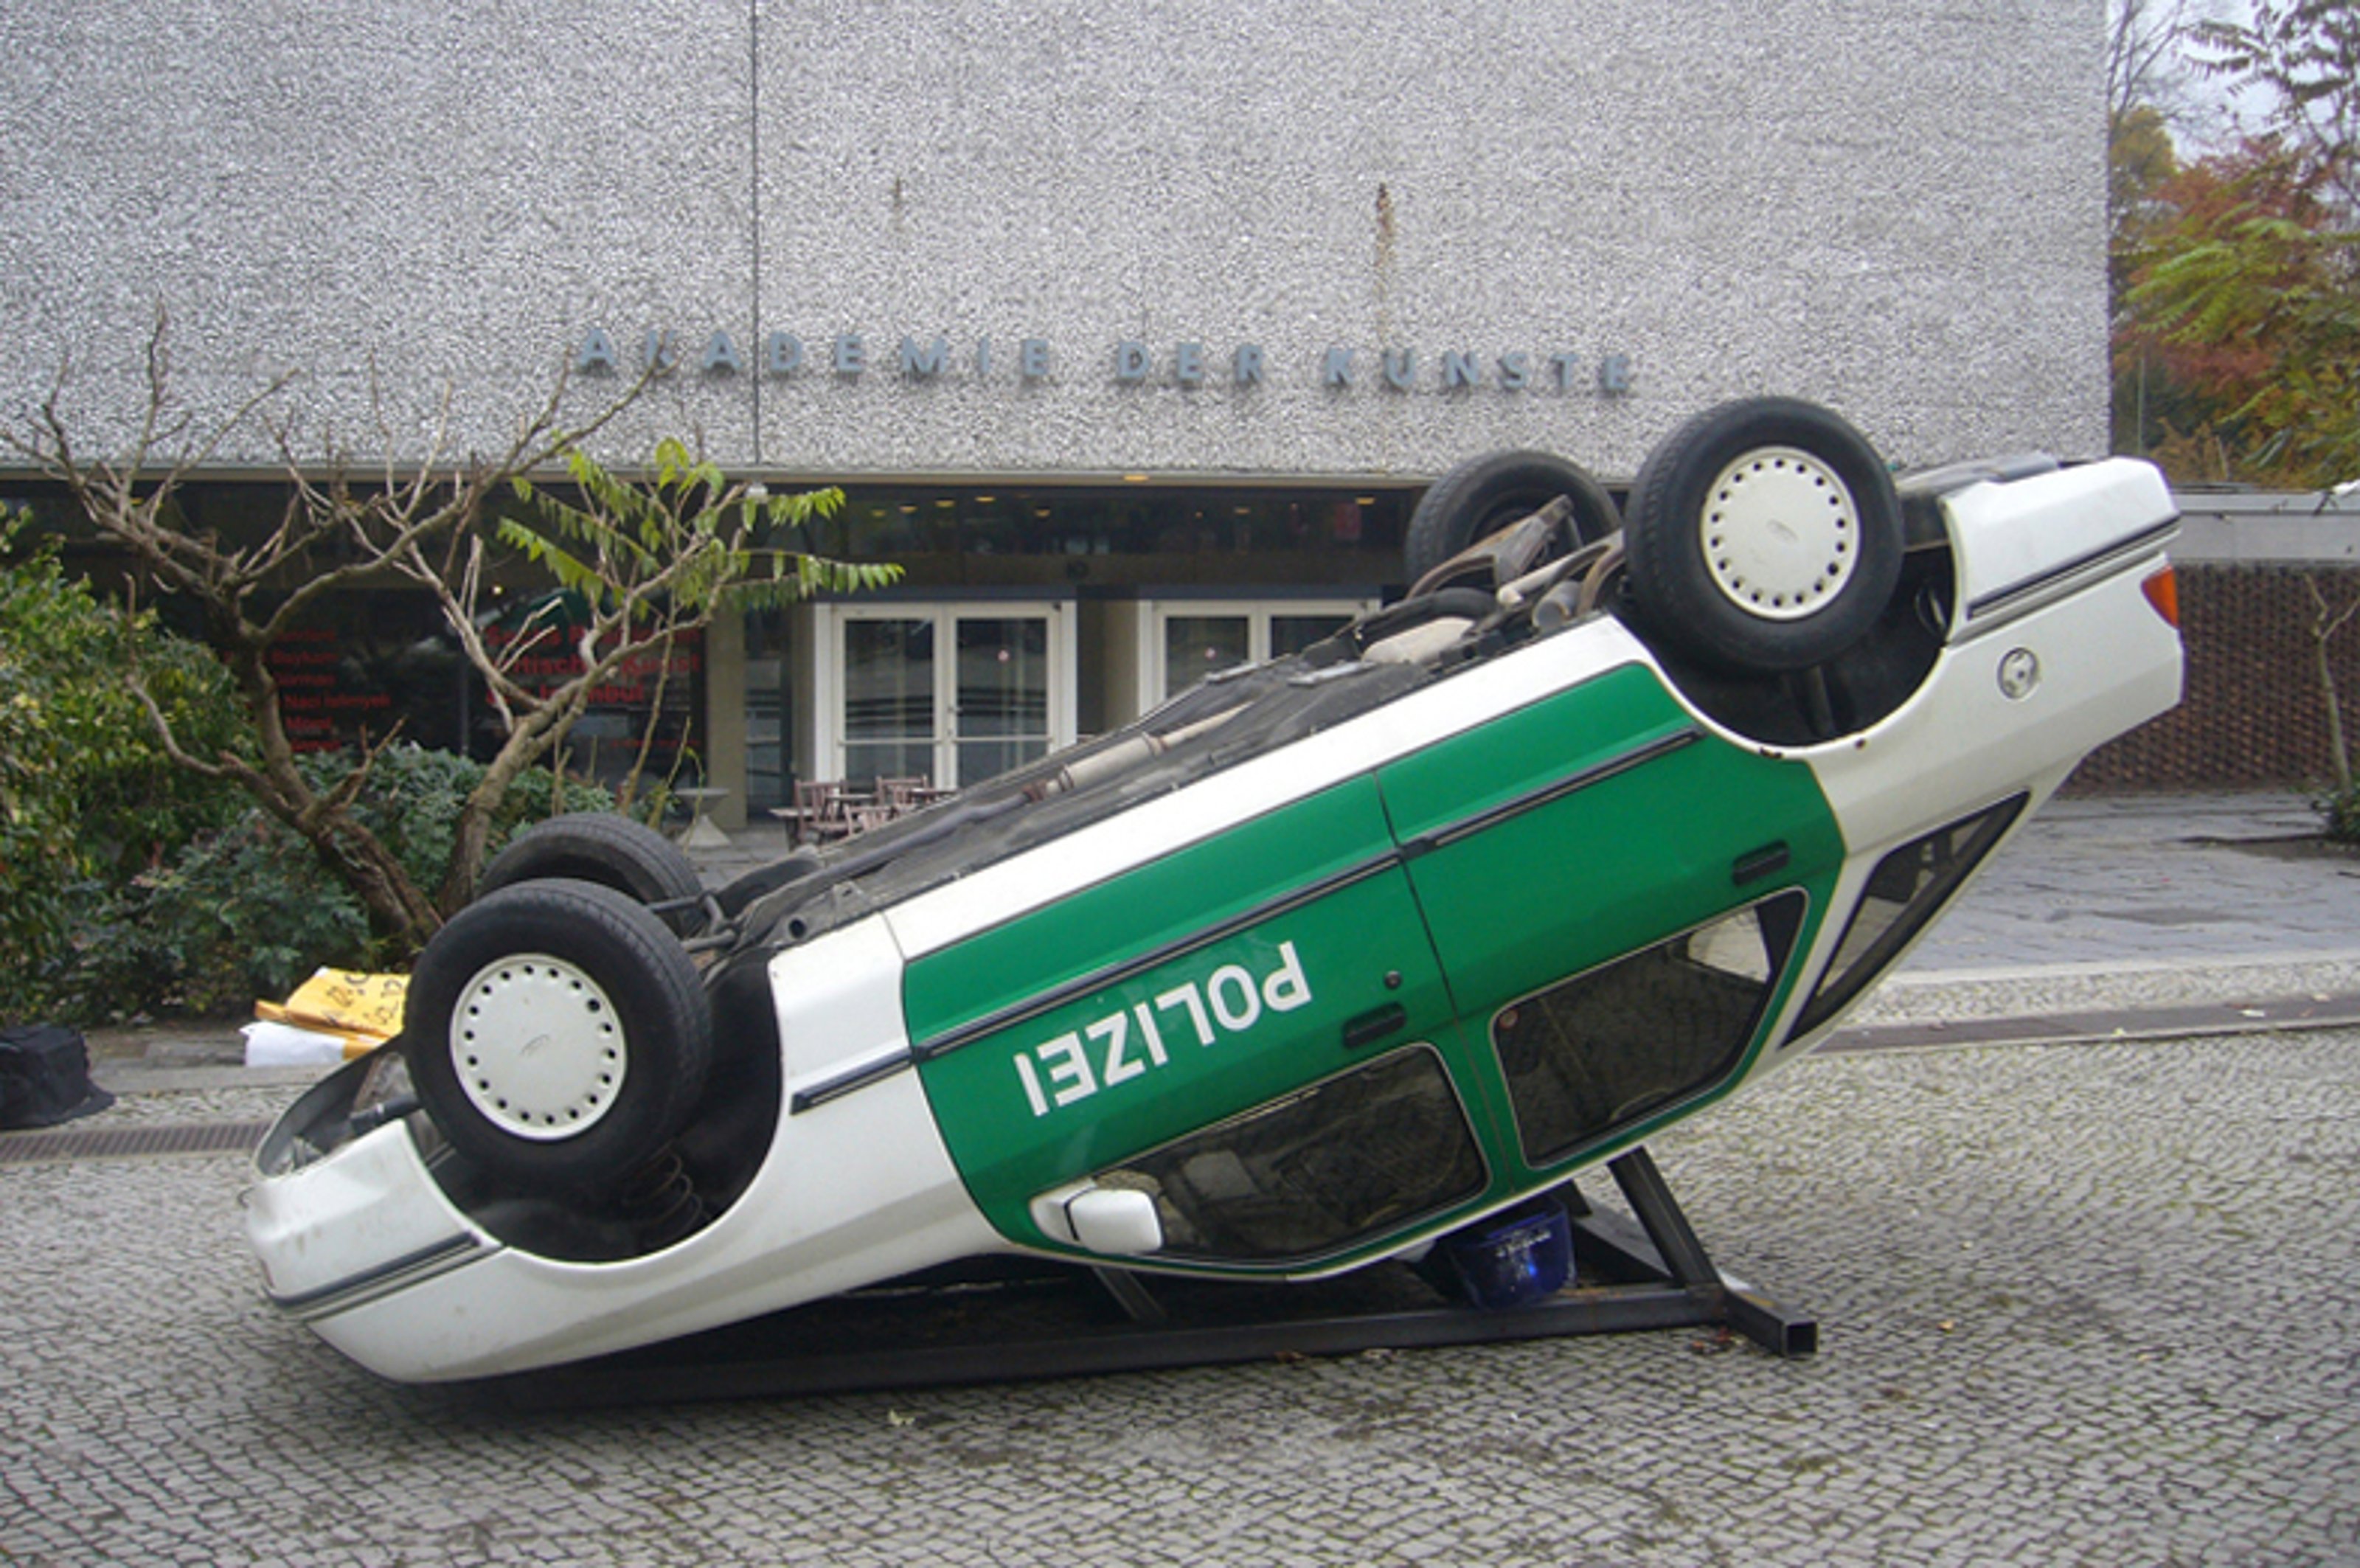 German police car flipped upside down in front of Akademie Der Künst